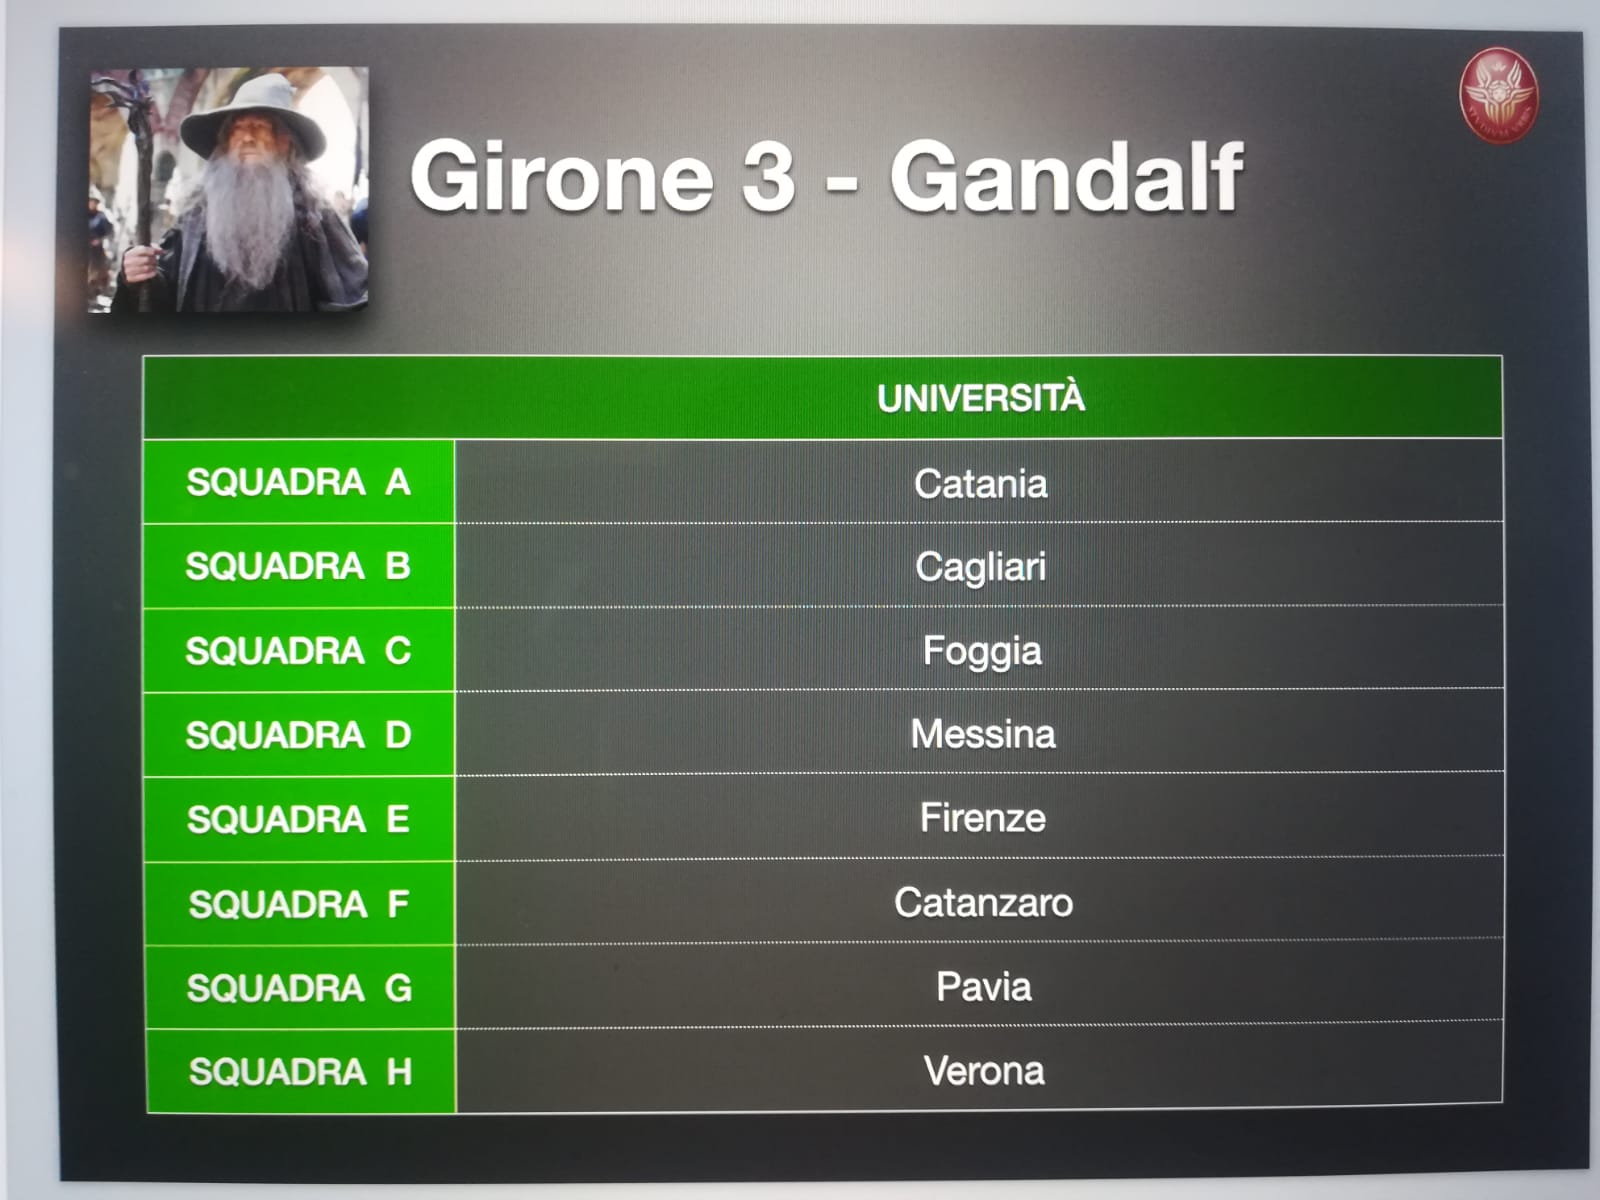 Girone 3